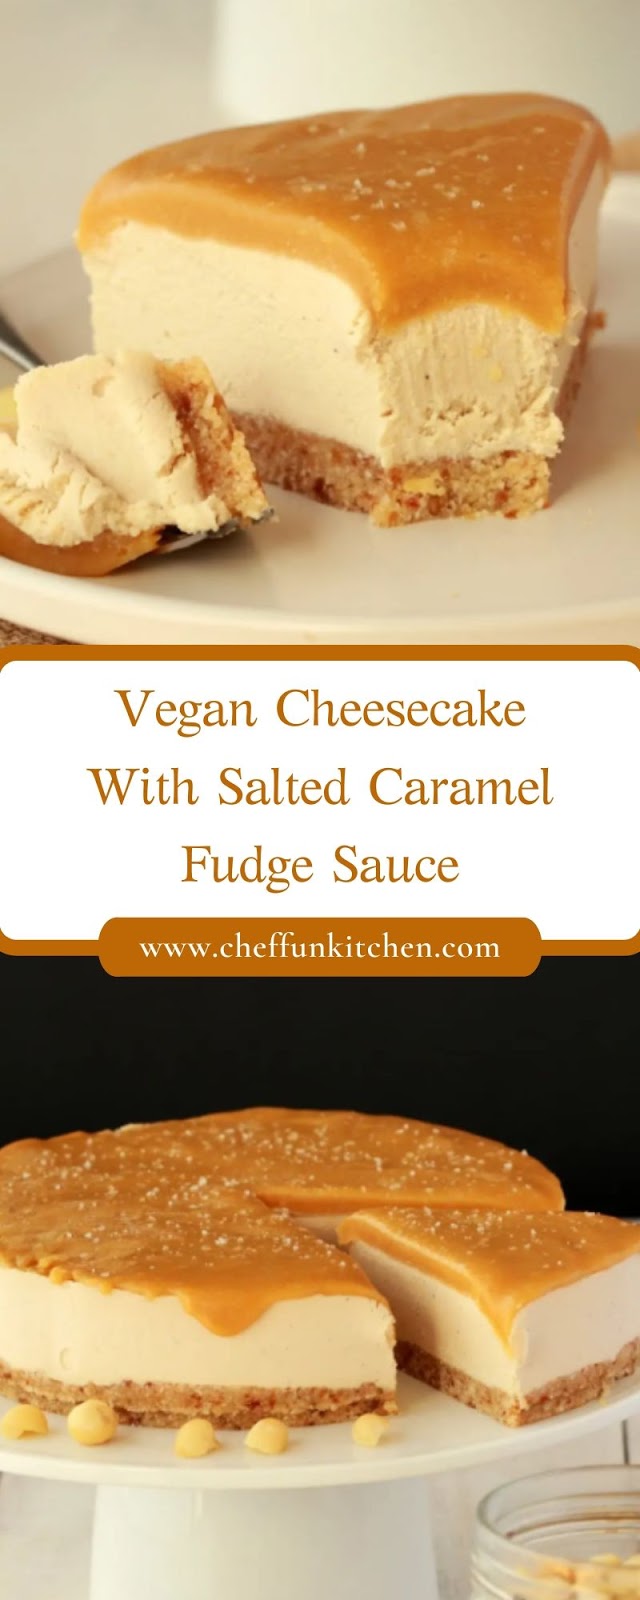 Vegan Cheesecake With Salted Caramel Fudge Sauce